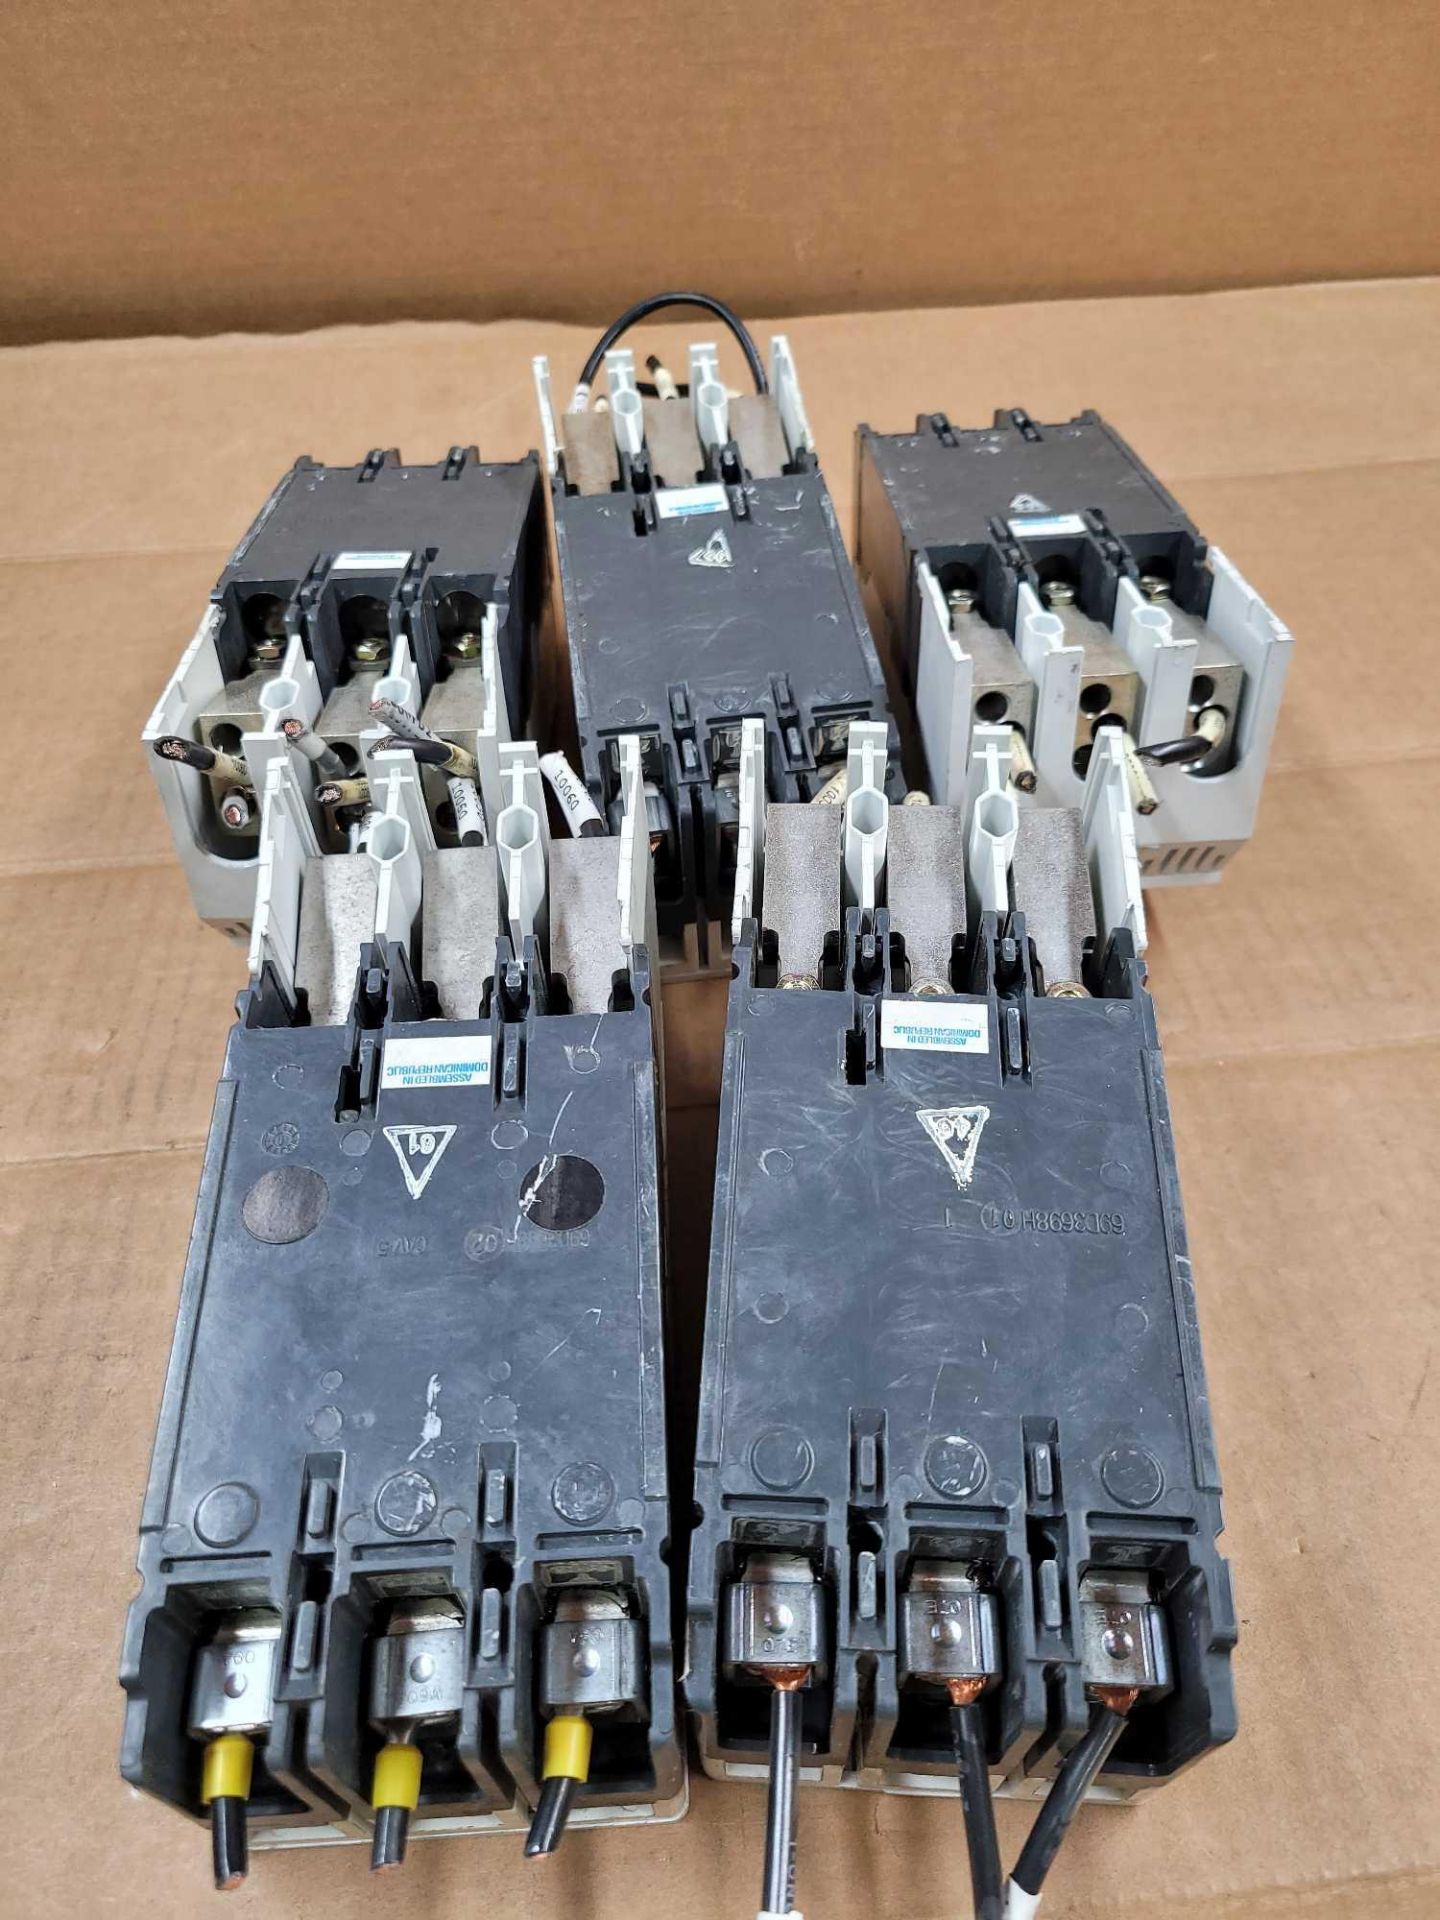 LOT OF 5 ALLEN BRADLEY 140U-H6C3-C30B / 30 Amp Molded Case Circuit Breaker / Lot Weight: 13.0 lbs - Image 8 of 8